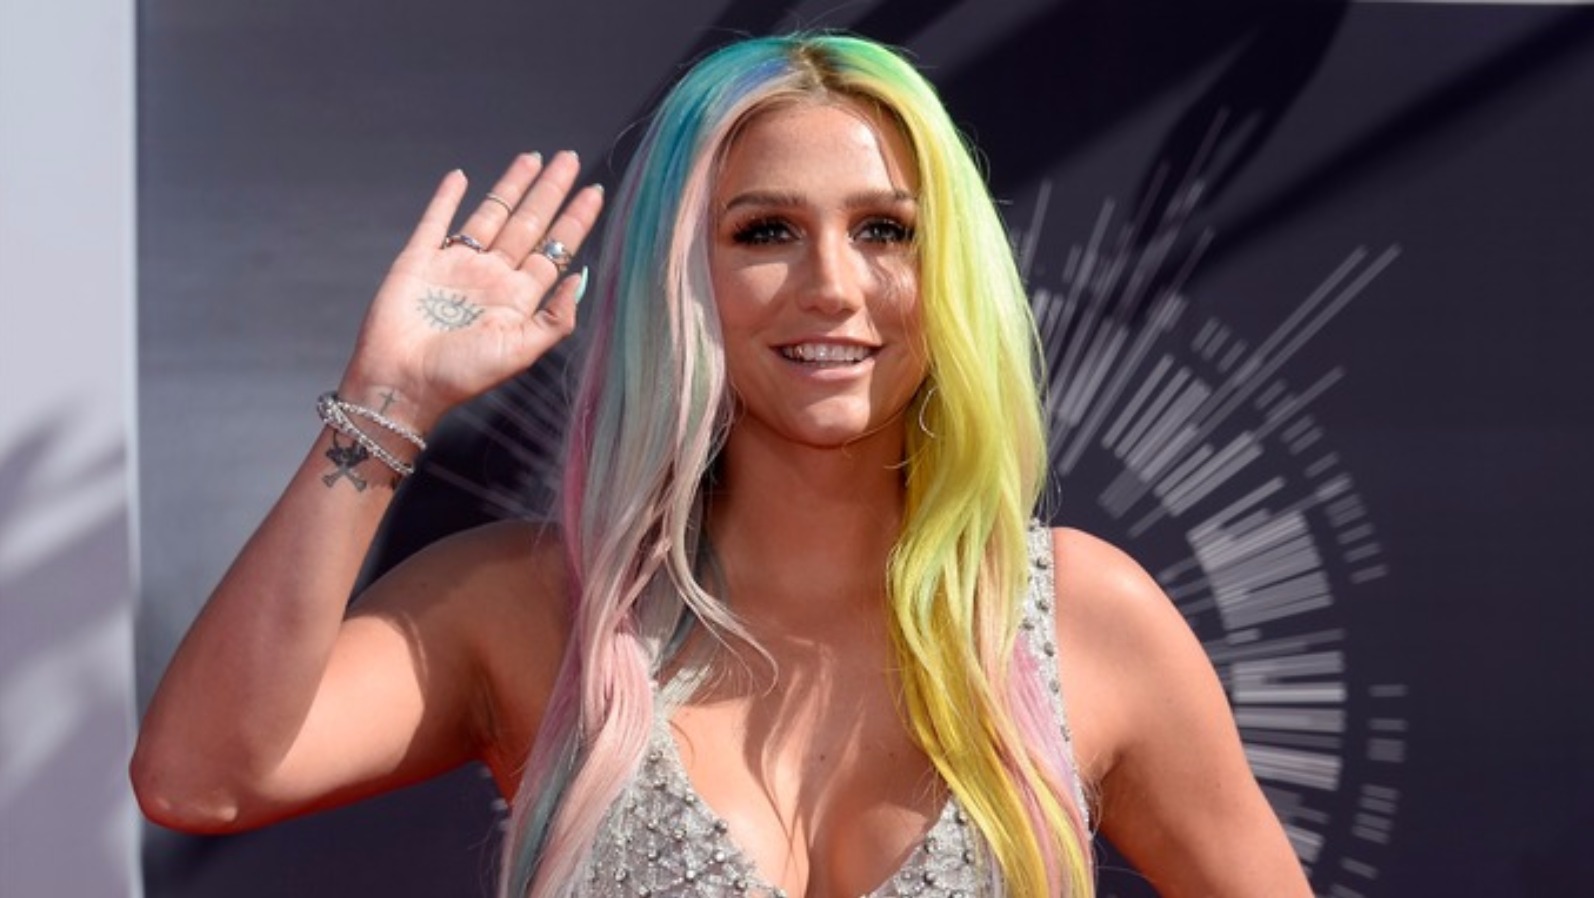 Singer Kesha releases first single since label dispute ITV News.